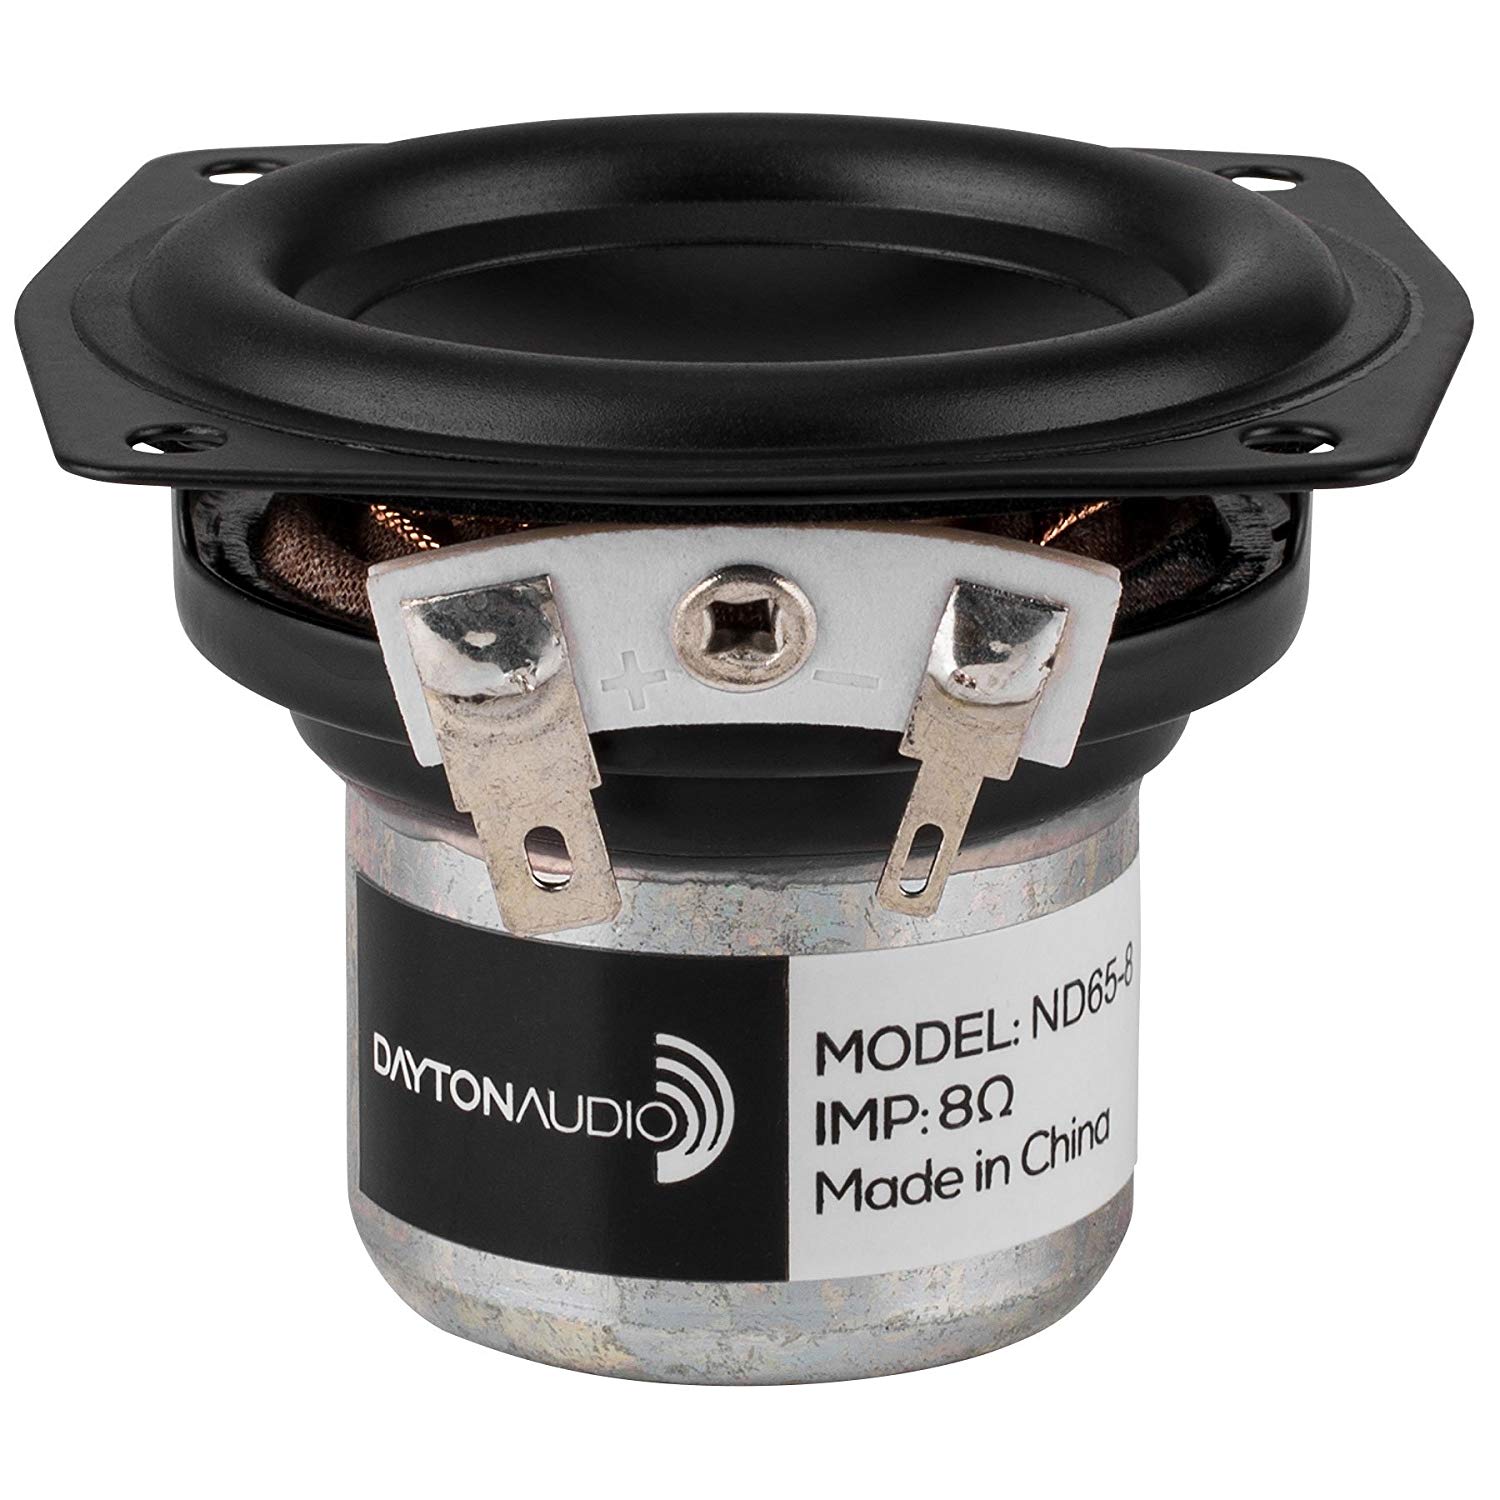 [Open Box] Dayton Audio ND65-8 2-1/2" Aluminum Cone Full-Range Neo Driver 8 Ohm